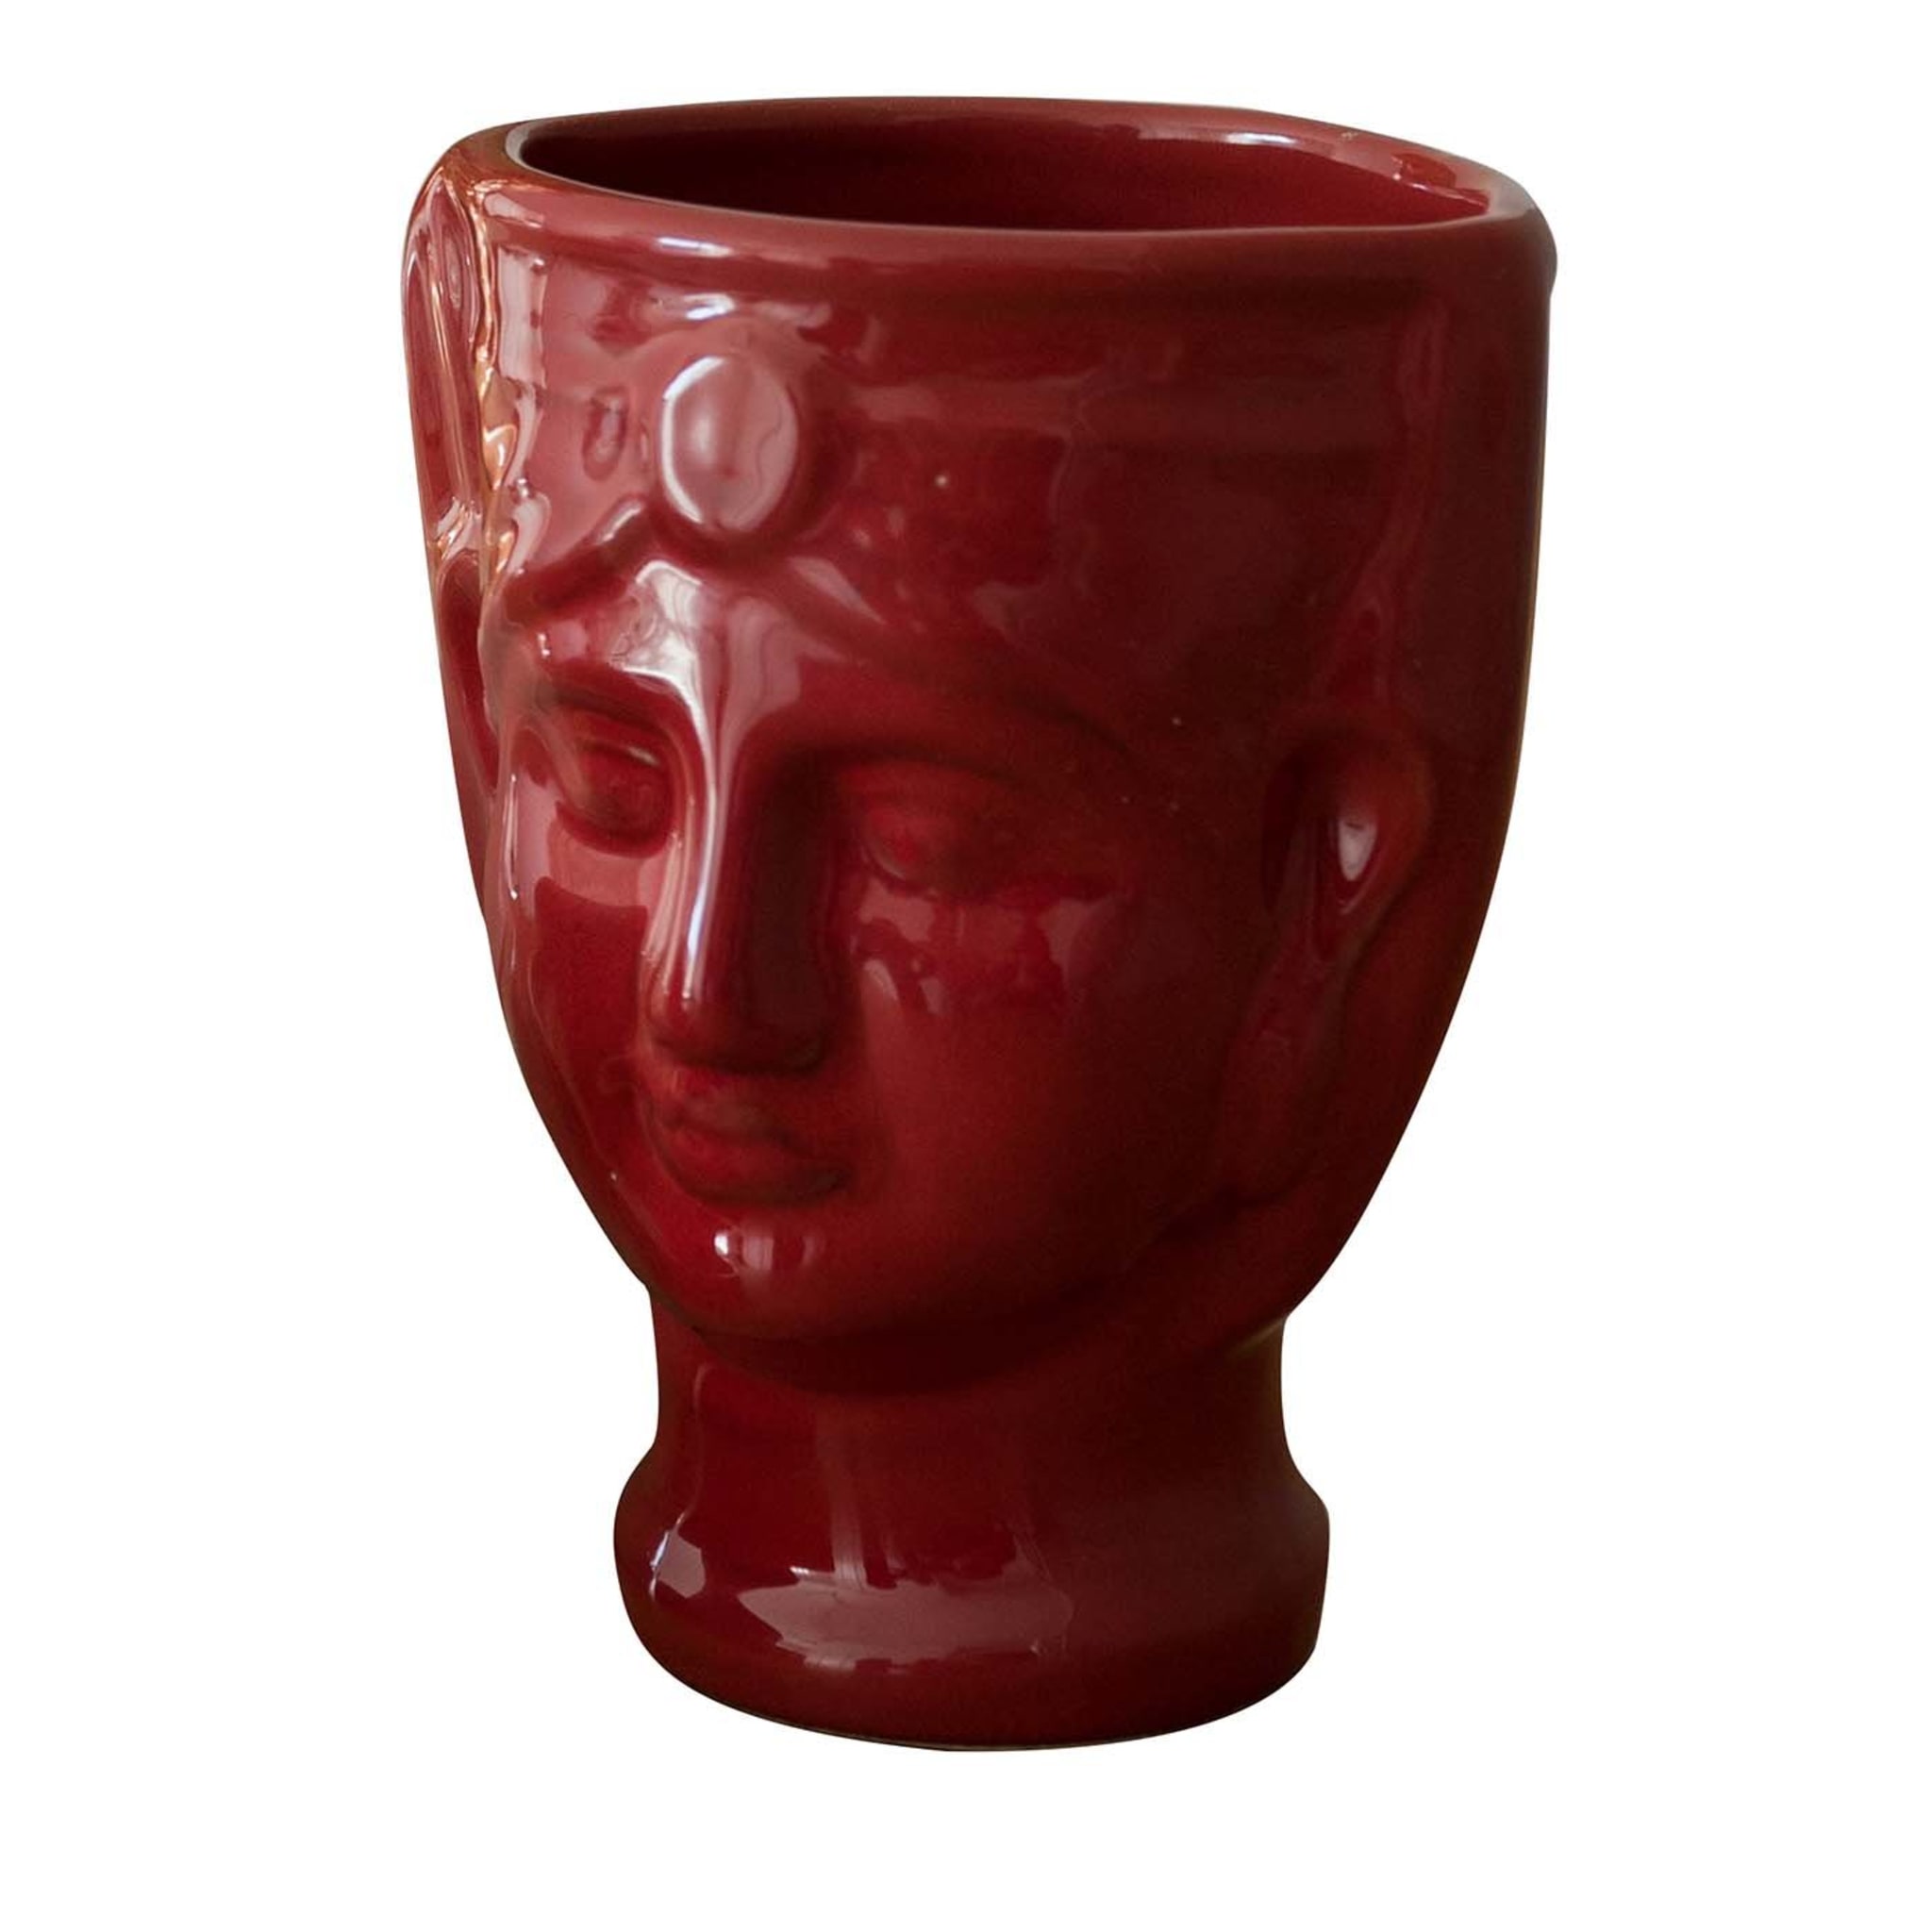 Testa Malandrina Rote Vase - Hauptansicht